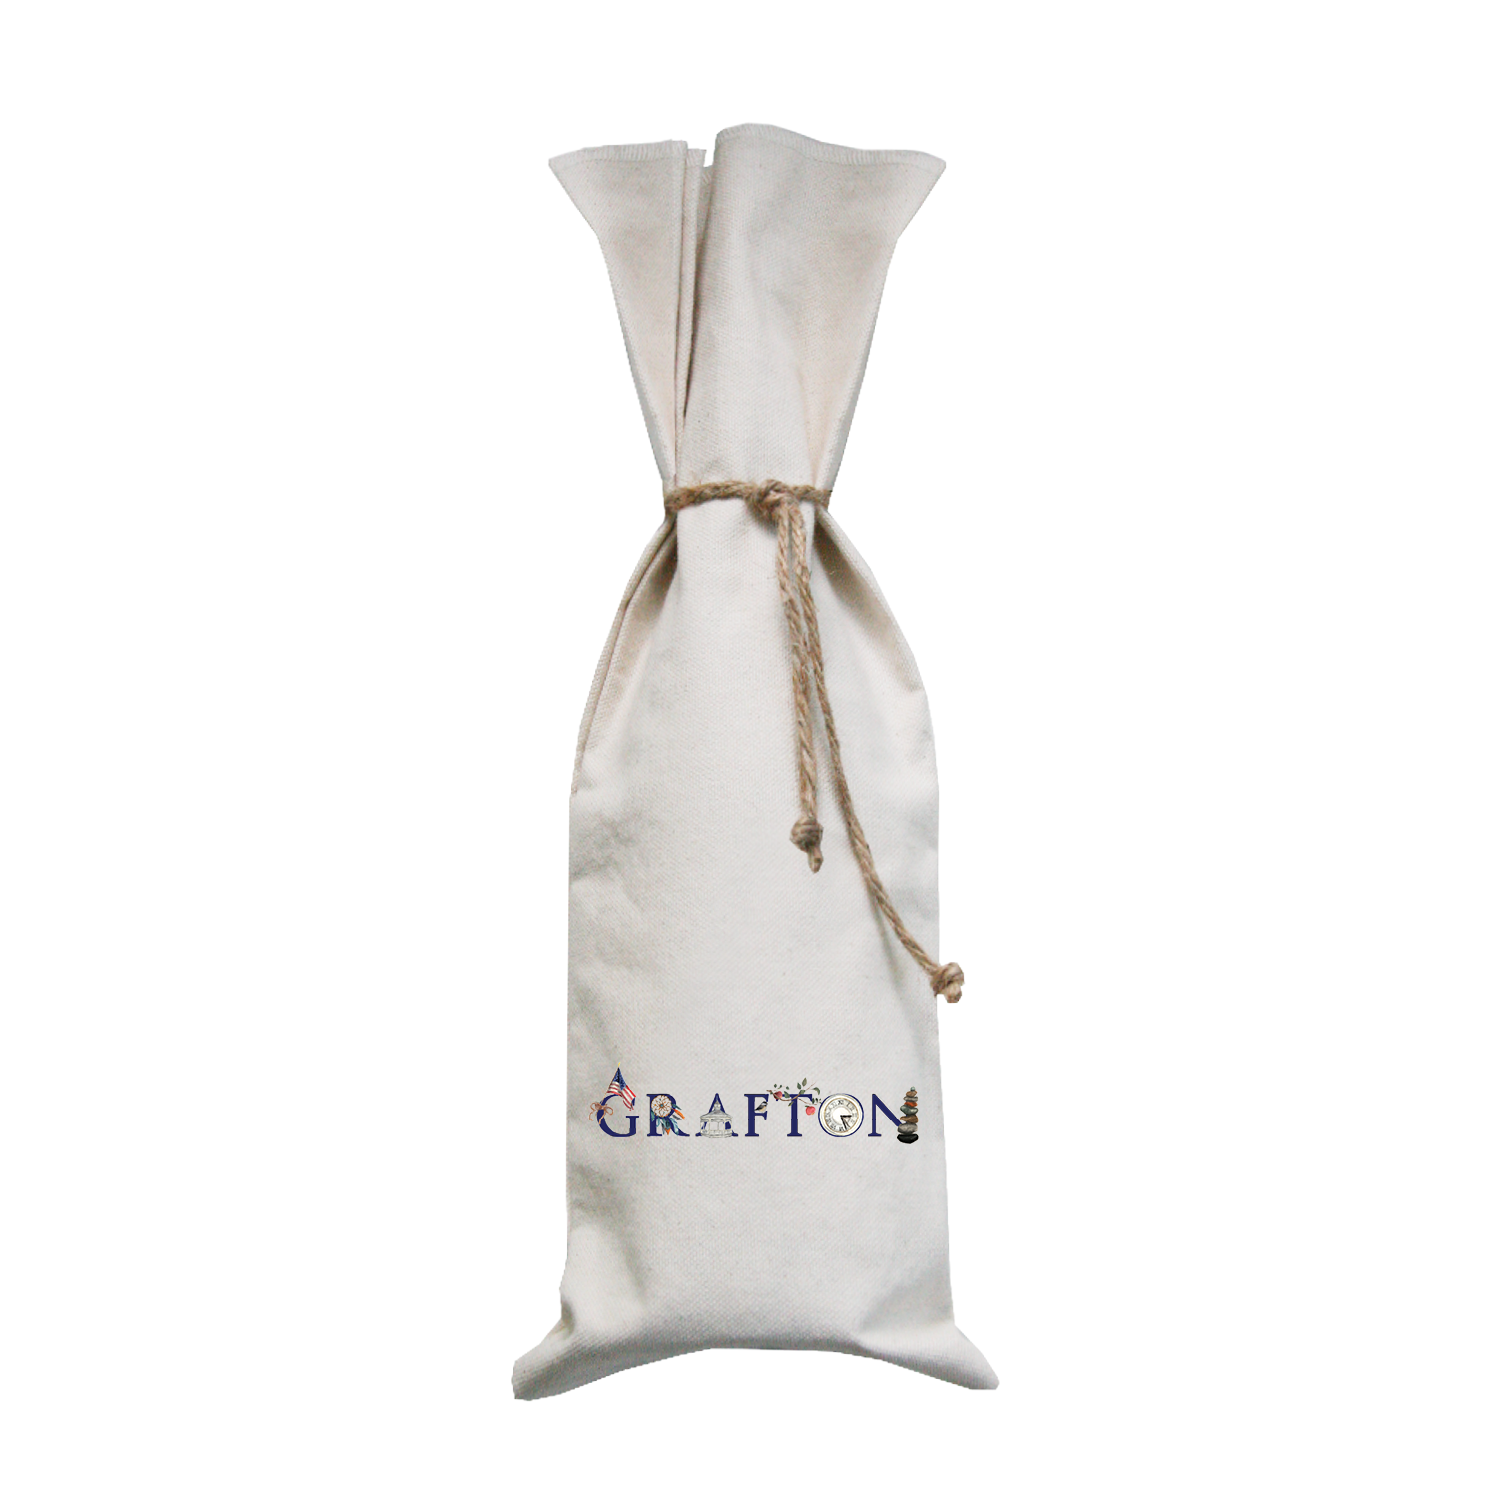 grafton wine bag